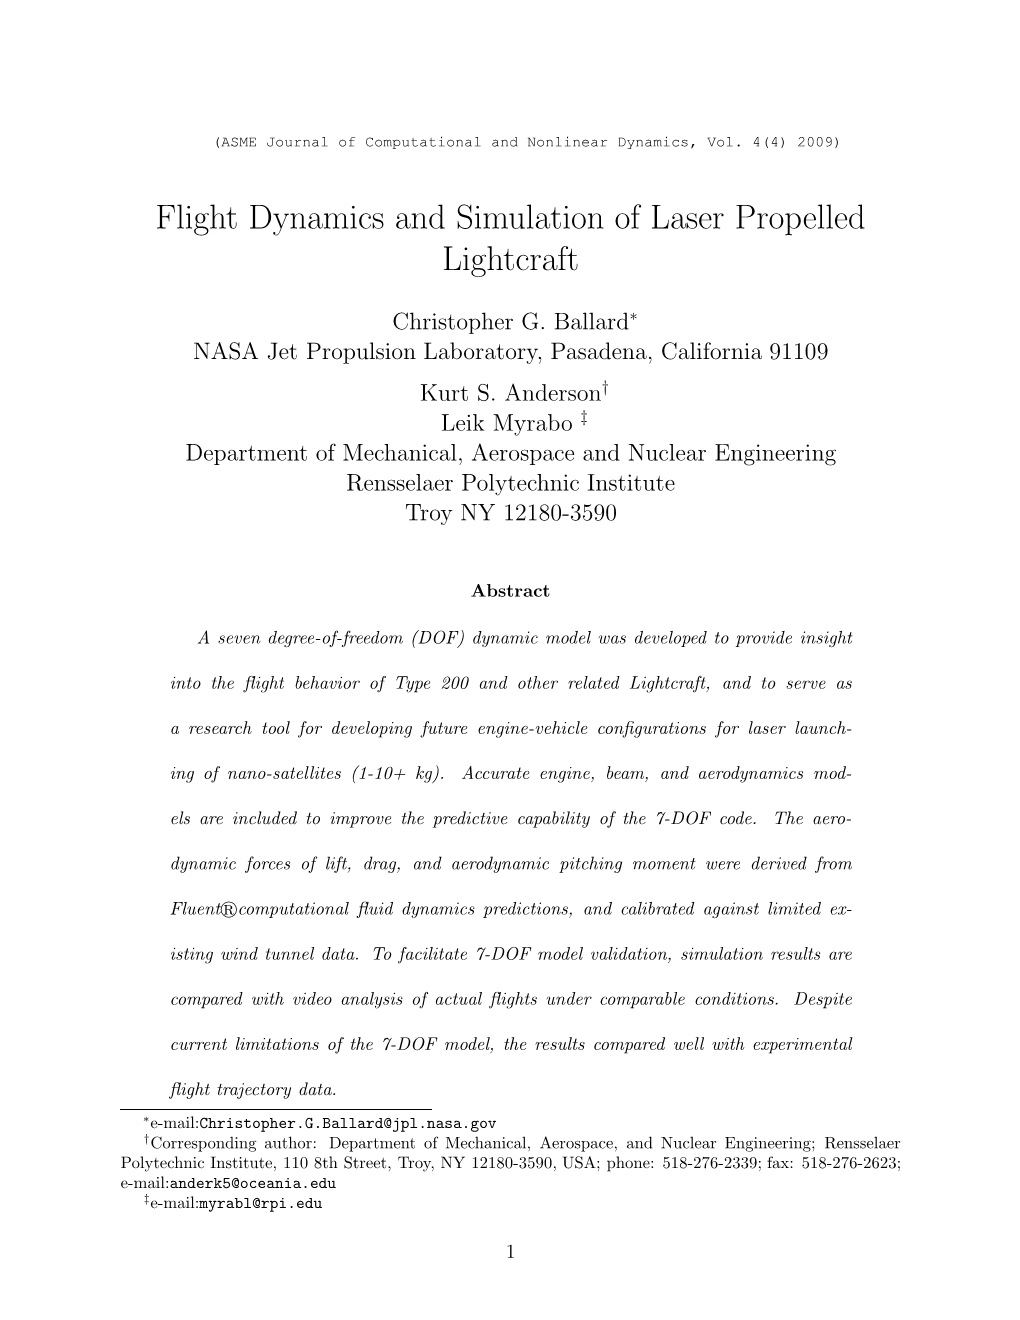 Flight Dynamics and Simulation of Laser Propelled Lightcraft